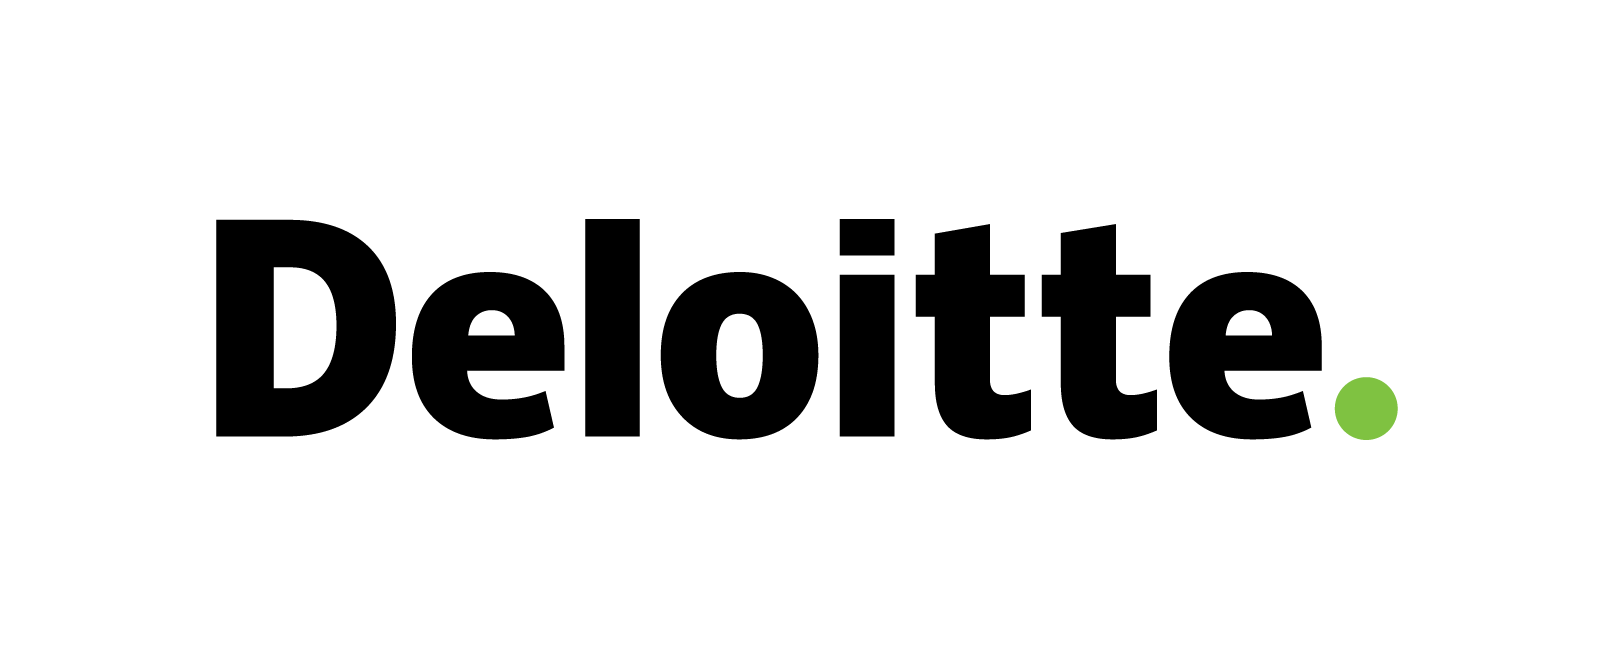 Business Process and IT Inhousedag logo